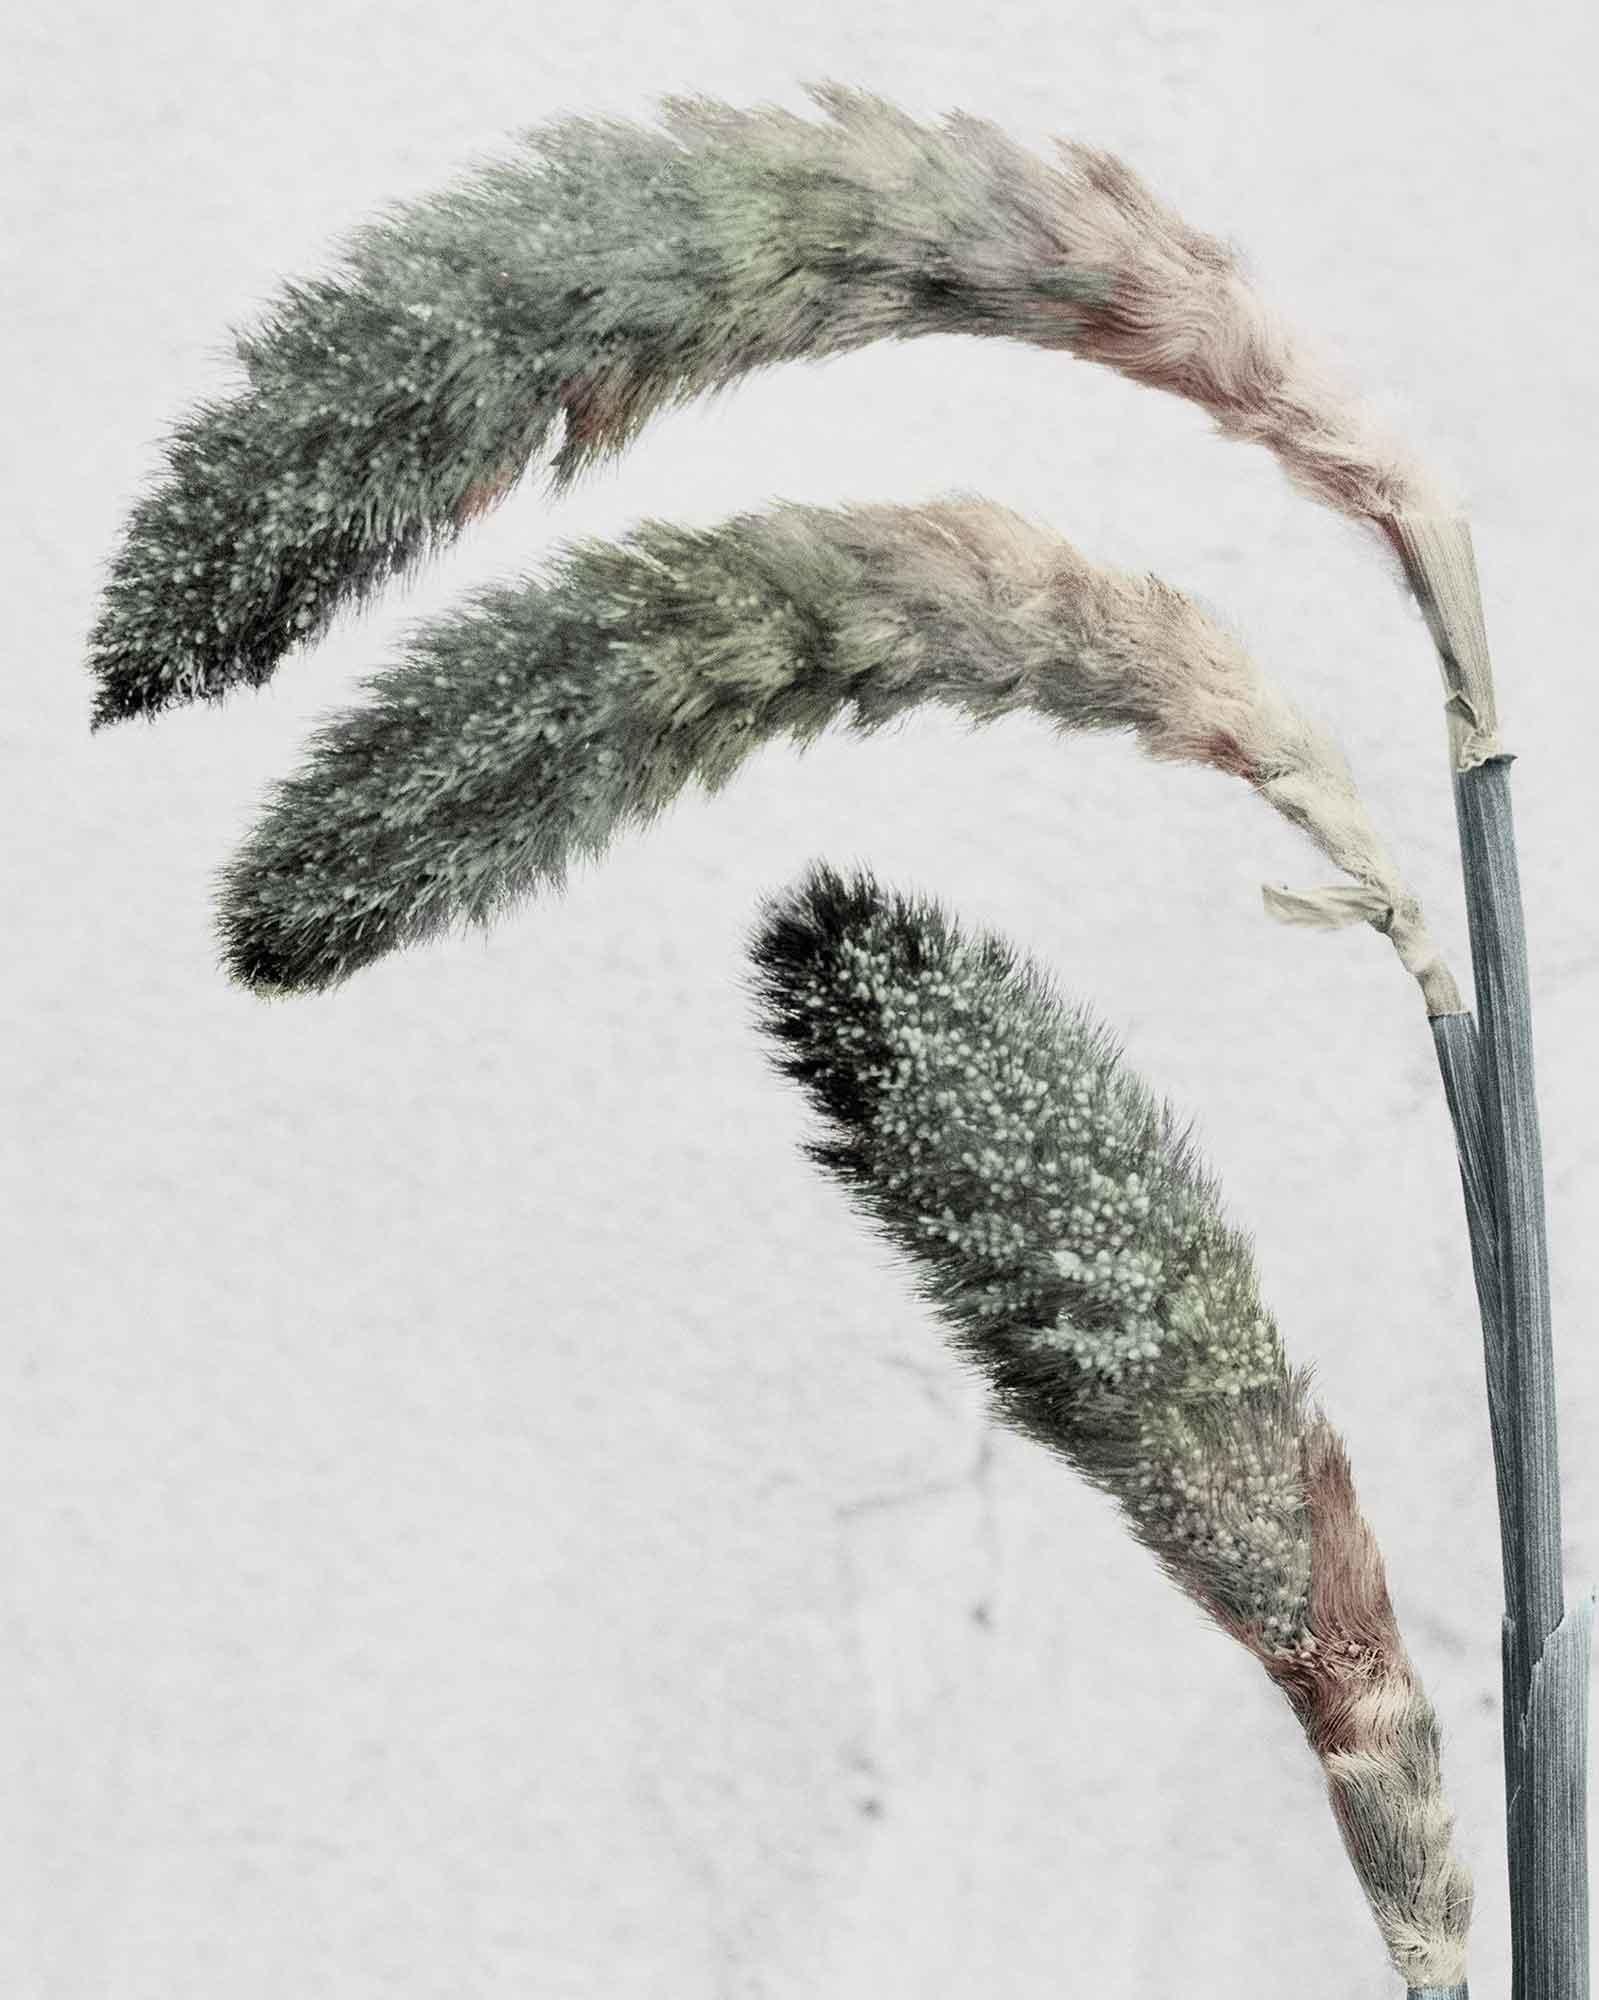 Botanica #22 (Pennisetum) – Photograph von Vee Speers